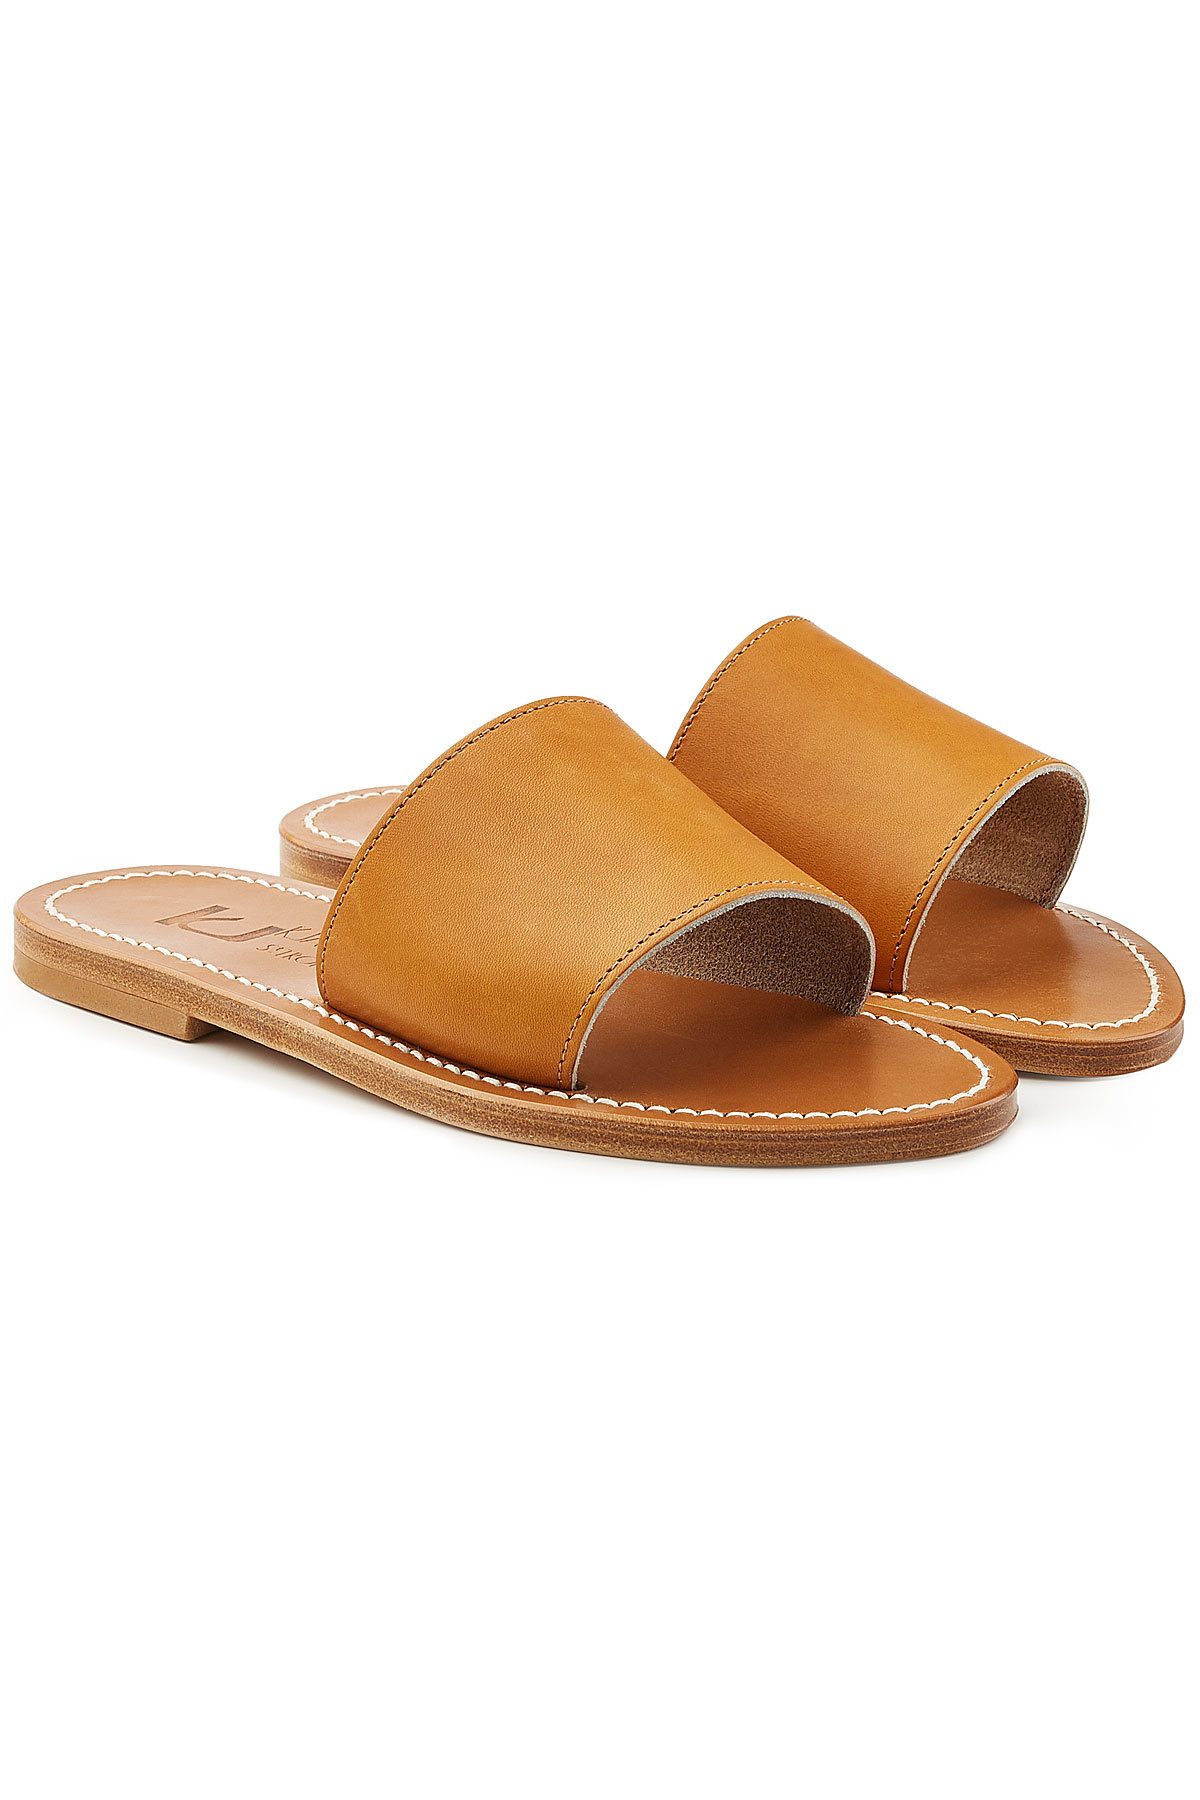 Capri Leather Sandals by K.Jacques